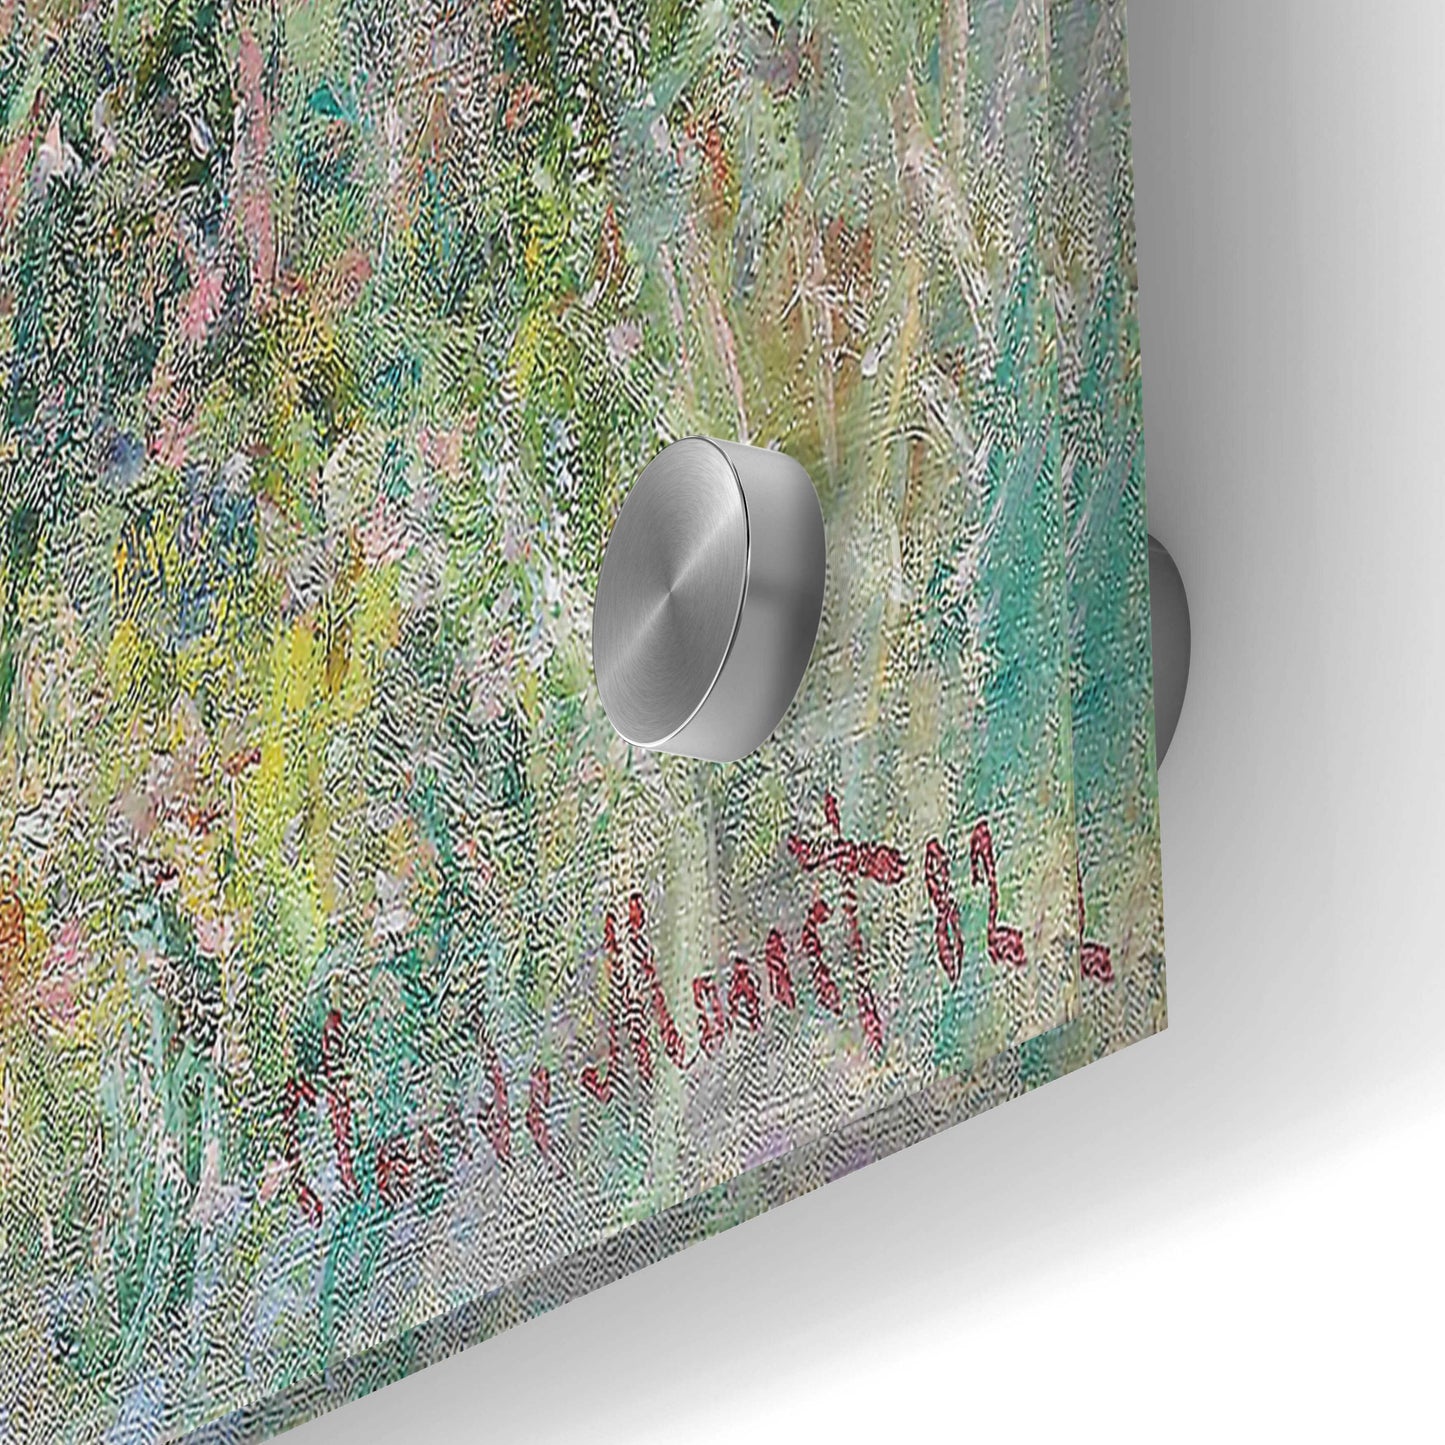 Epic Art 'Cliff Walk At Pourville' by Claude Monet, Acrylic Glass Wall Art,36x24